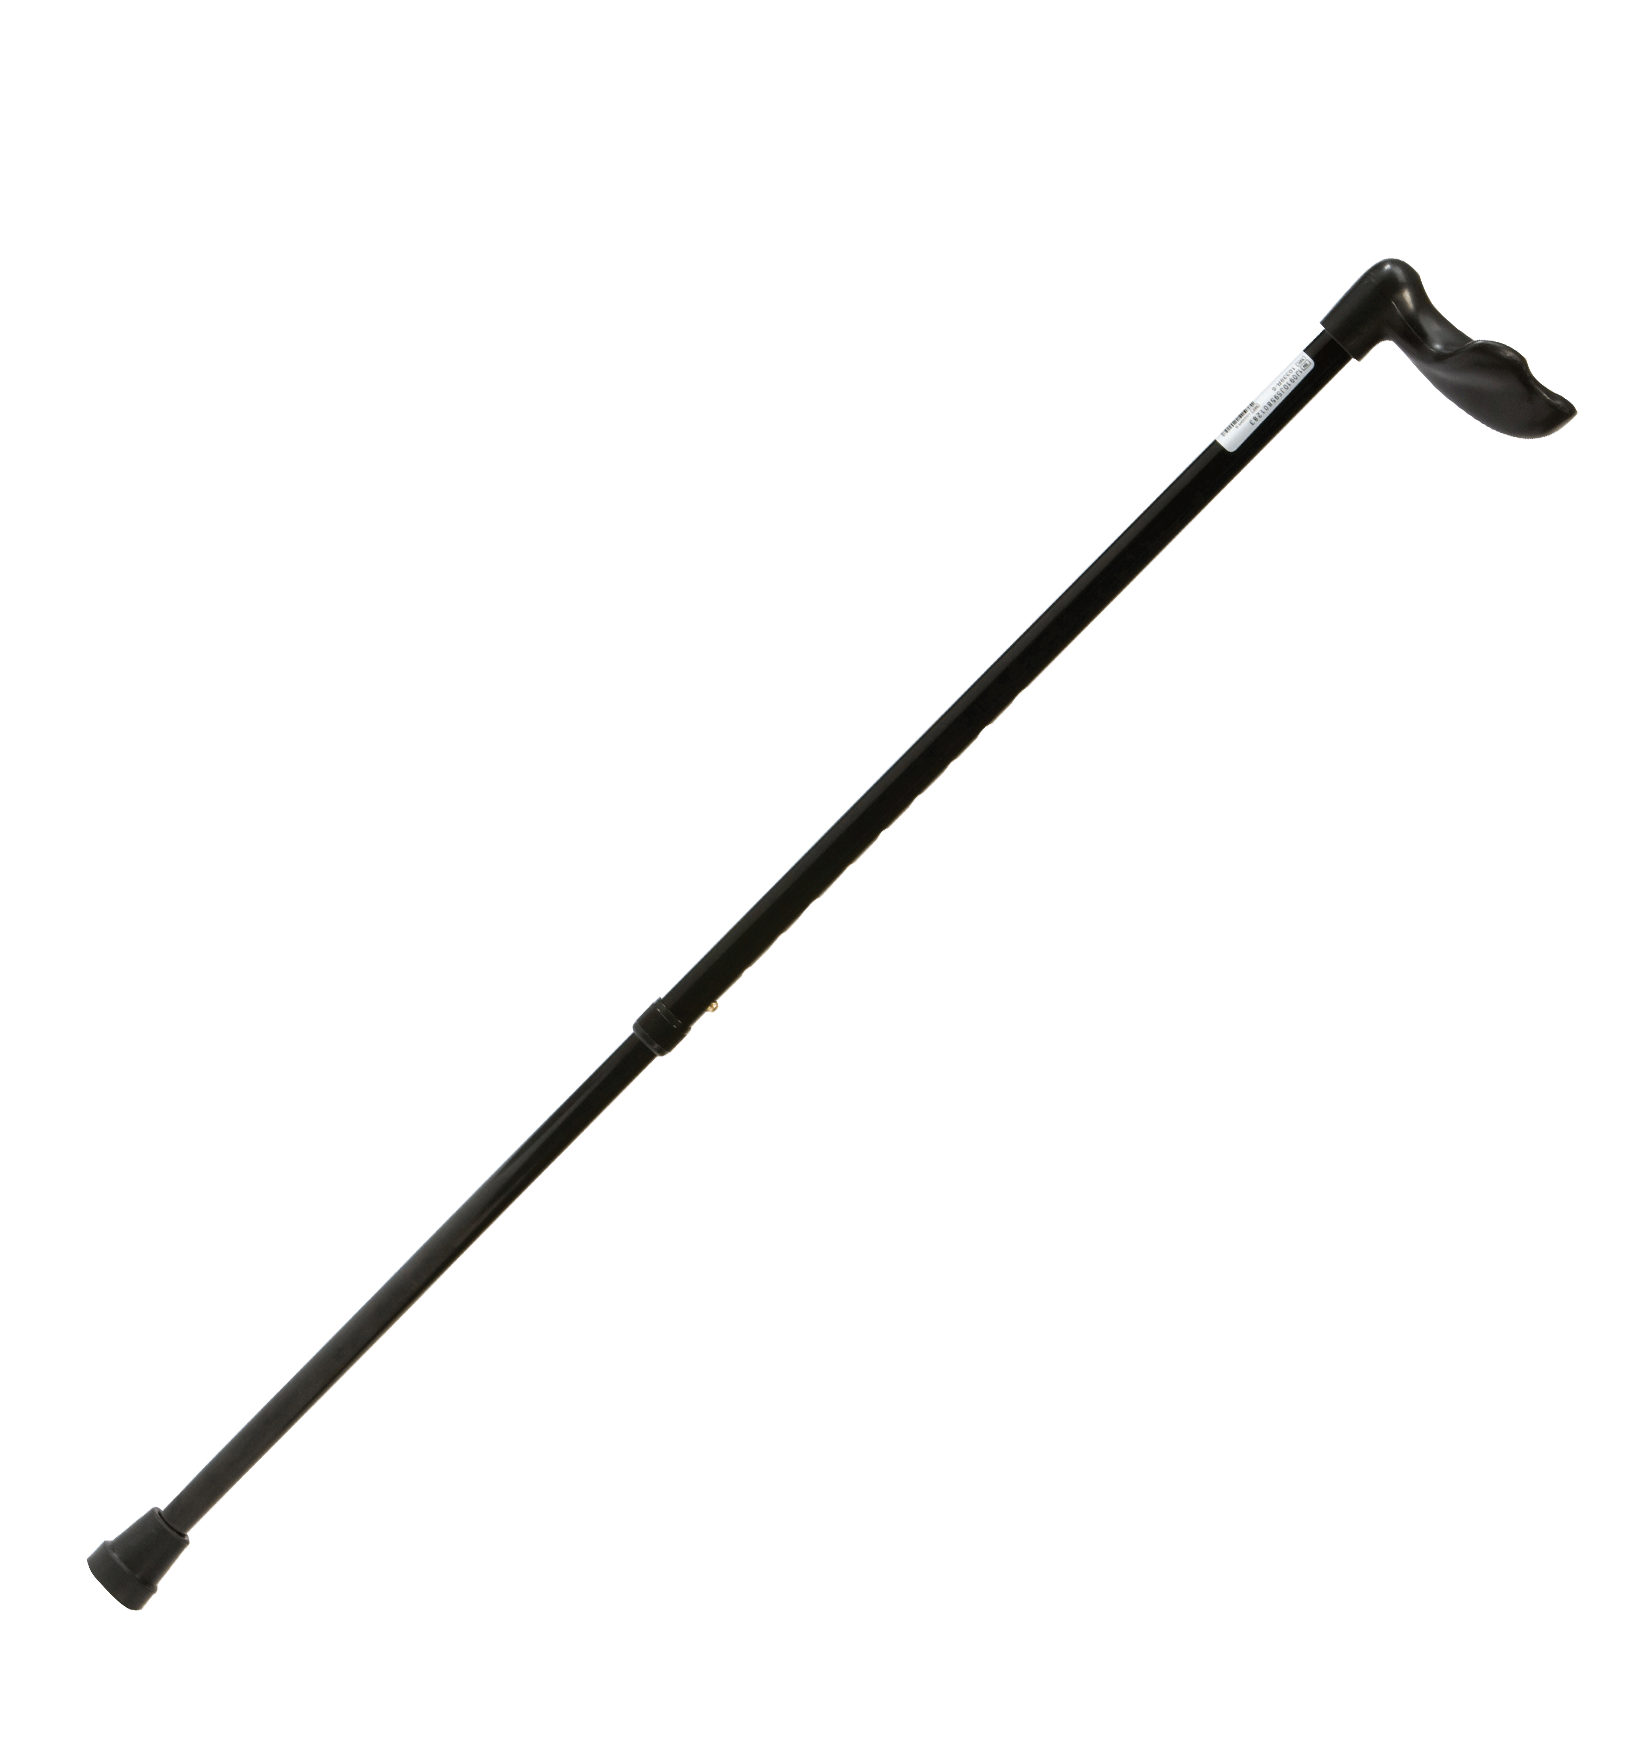 Drive - Aluminium Palm Grip Walking Stick by Drive